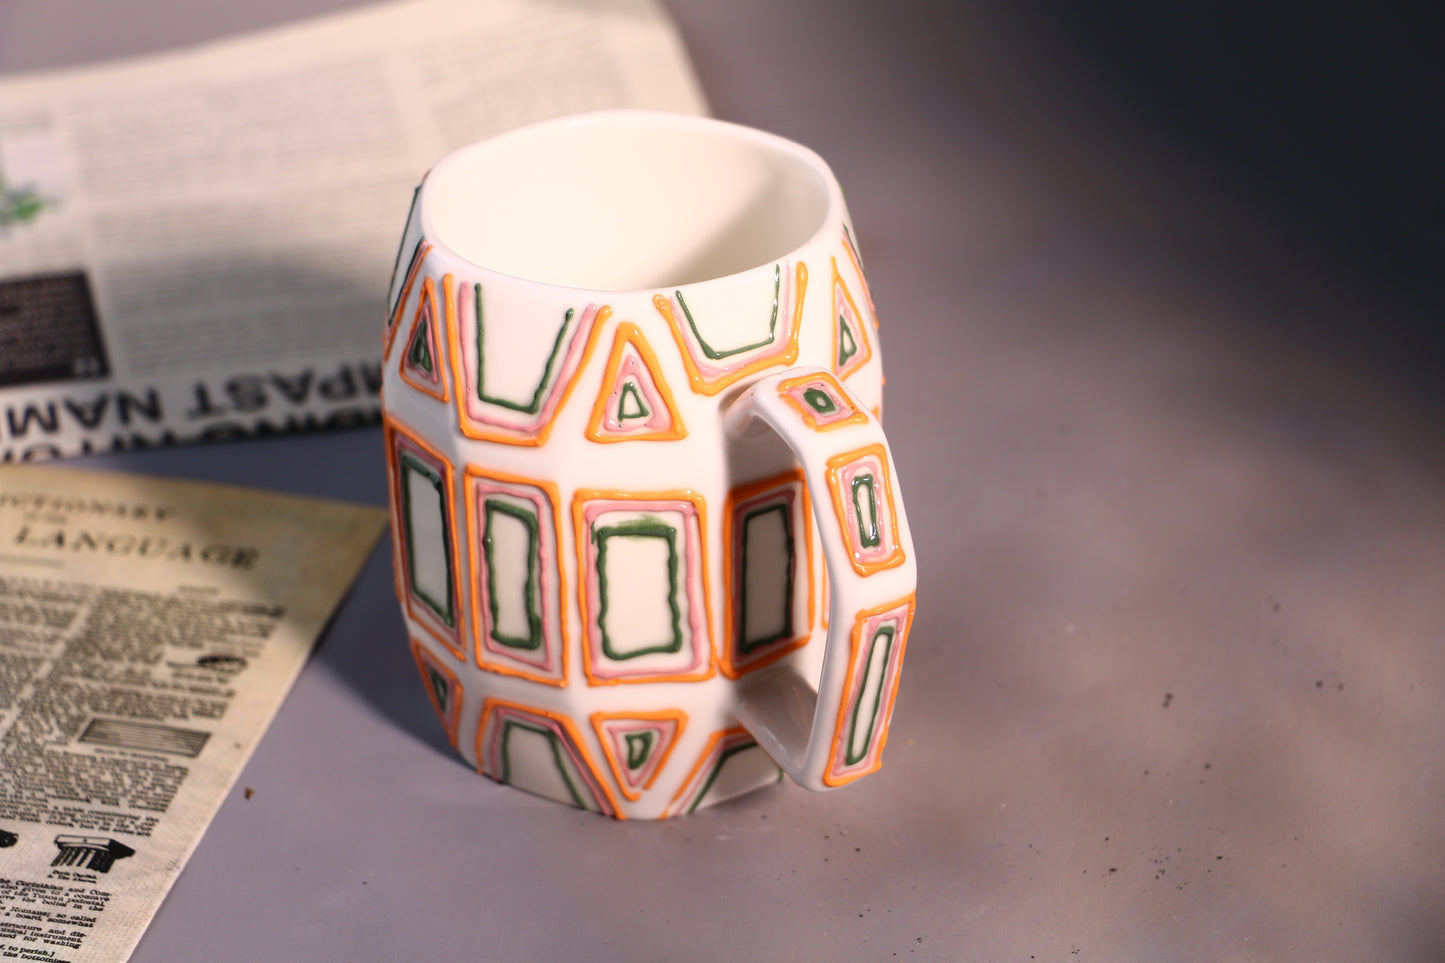 Geometric Figure Ceramic Coffee Mug, Hand-painted Lines Personalized Handmade Pottery Mug for Gifts